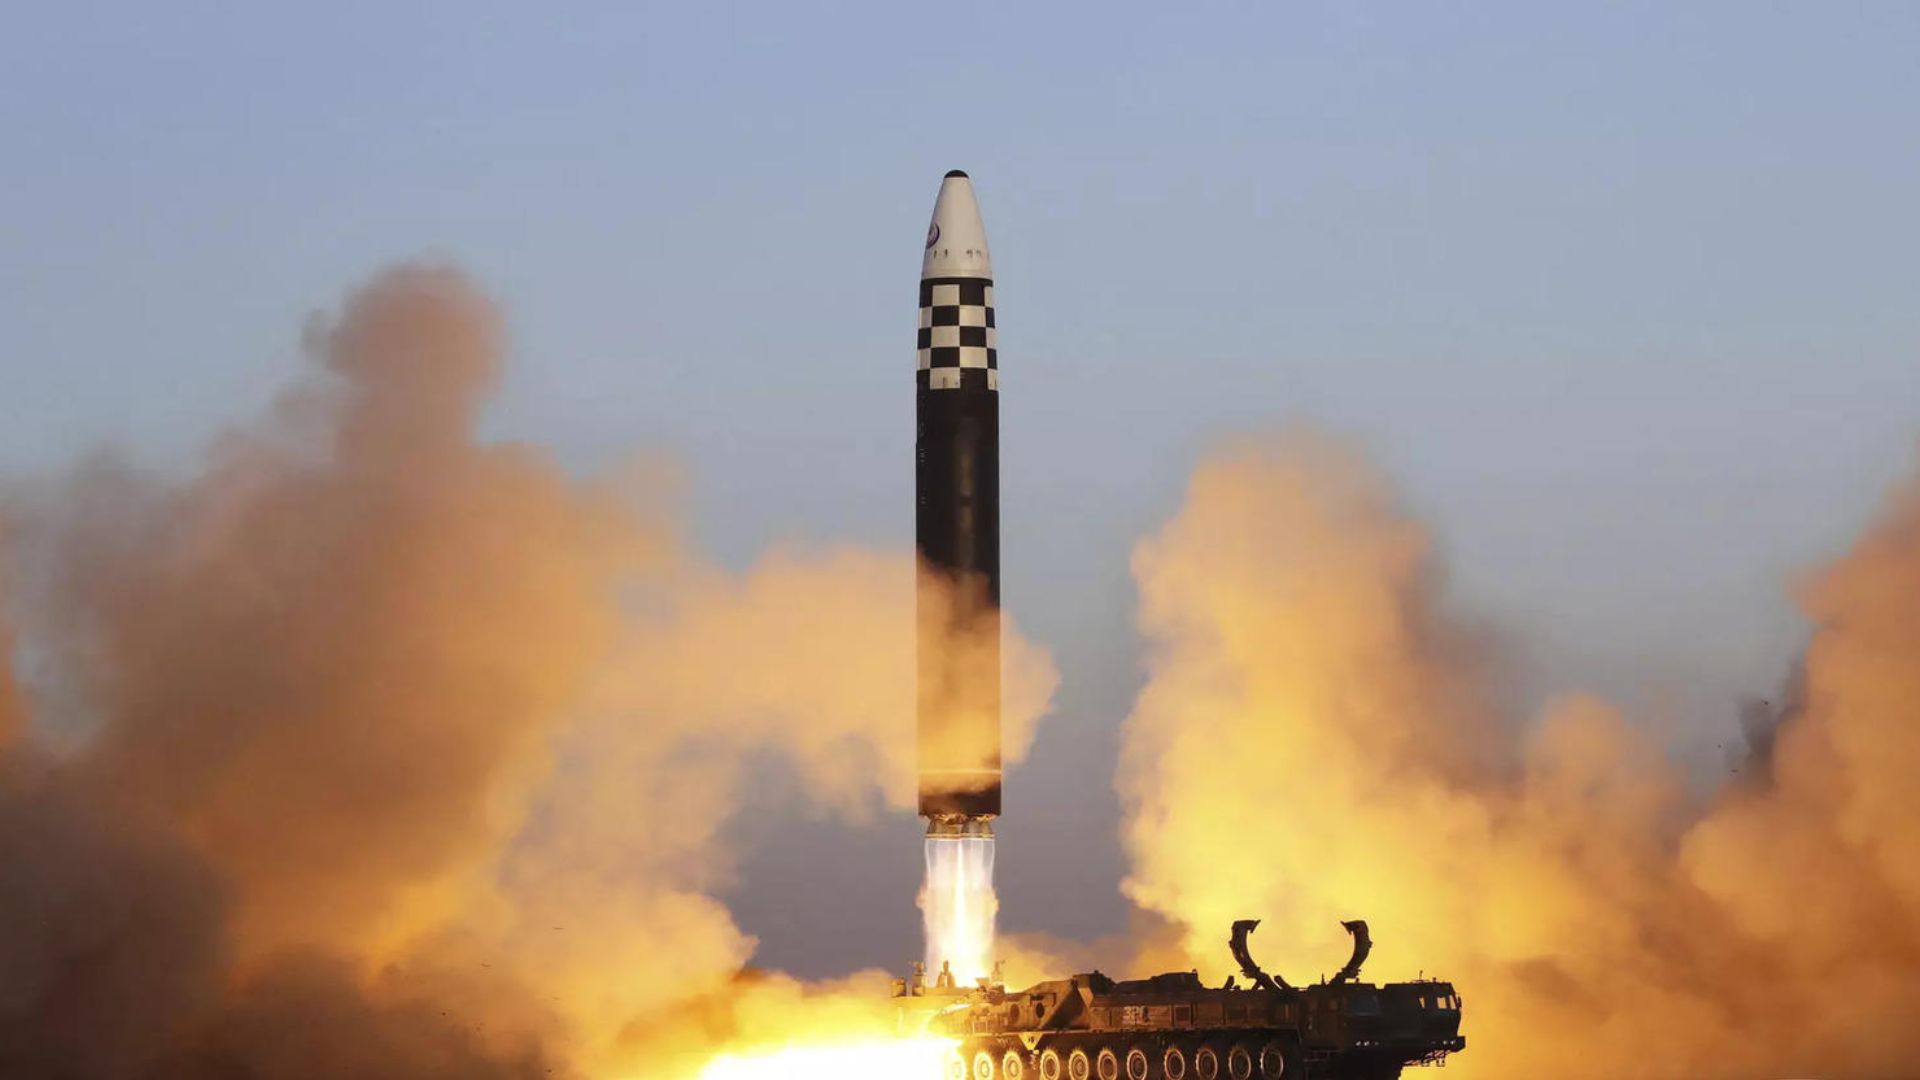 N Korea launched ballistic missile towards East Sea, says South Korea military